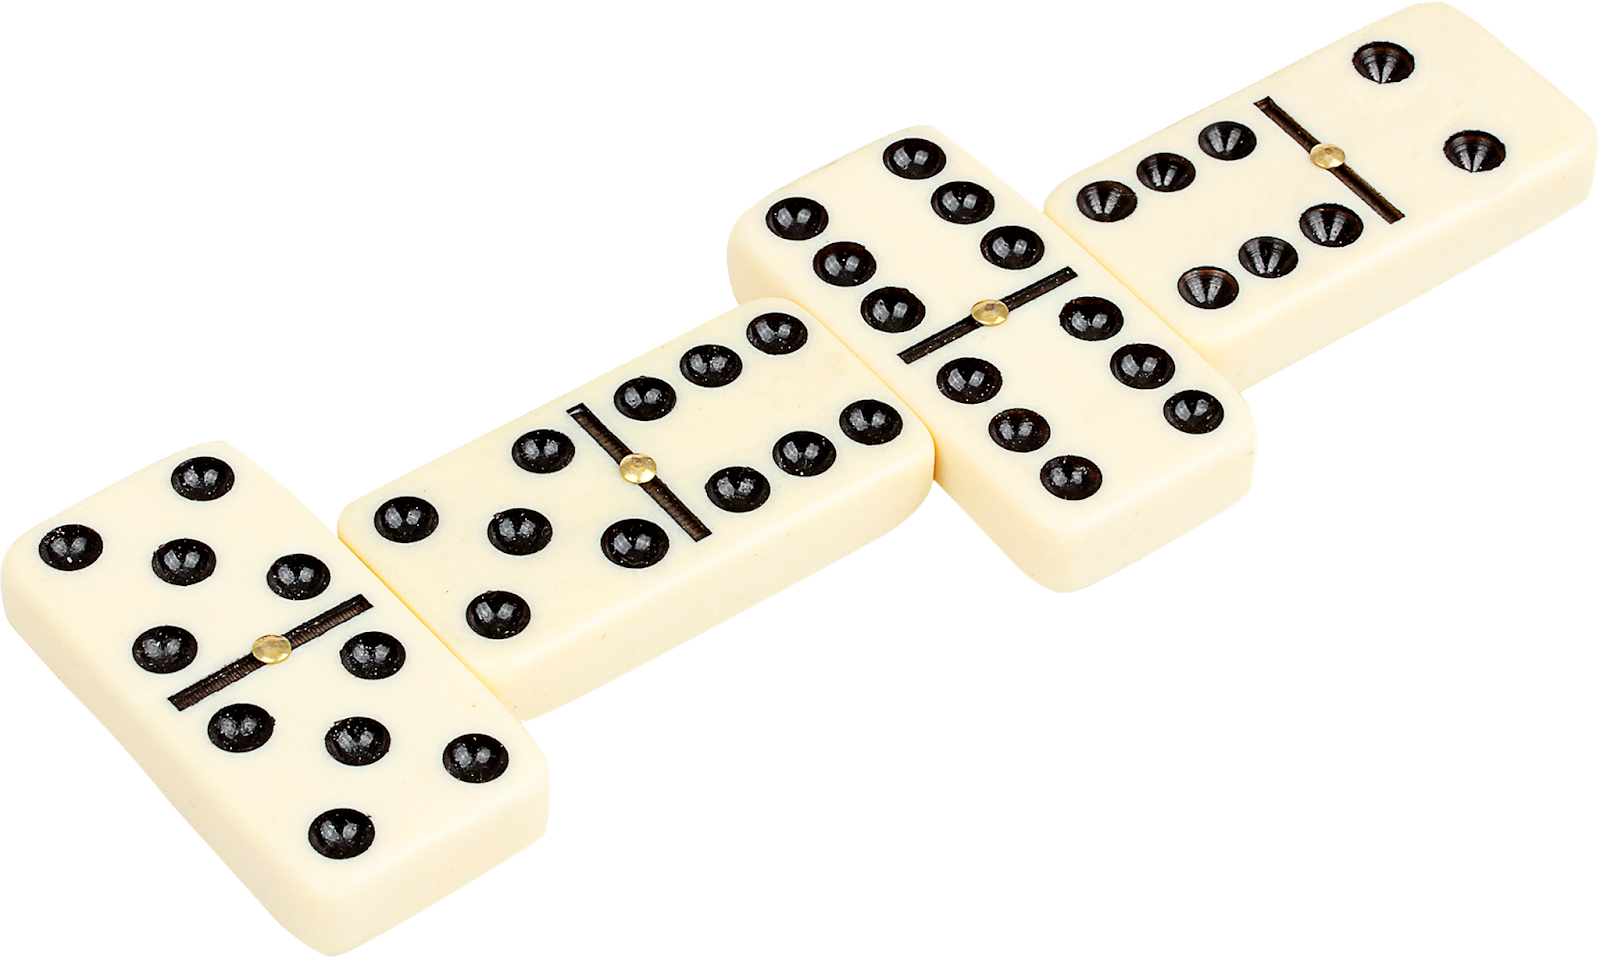 Domino damioselle